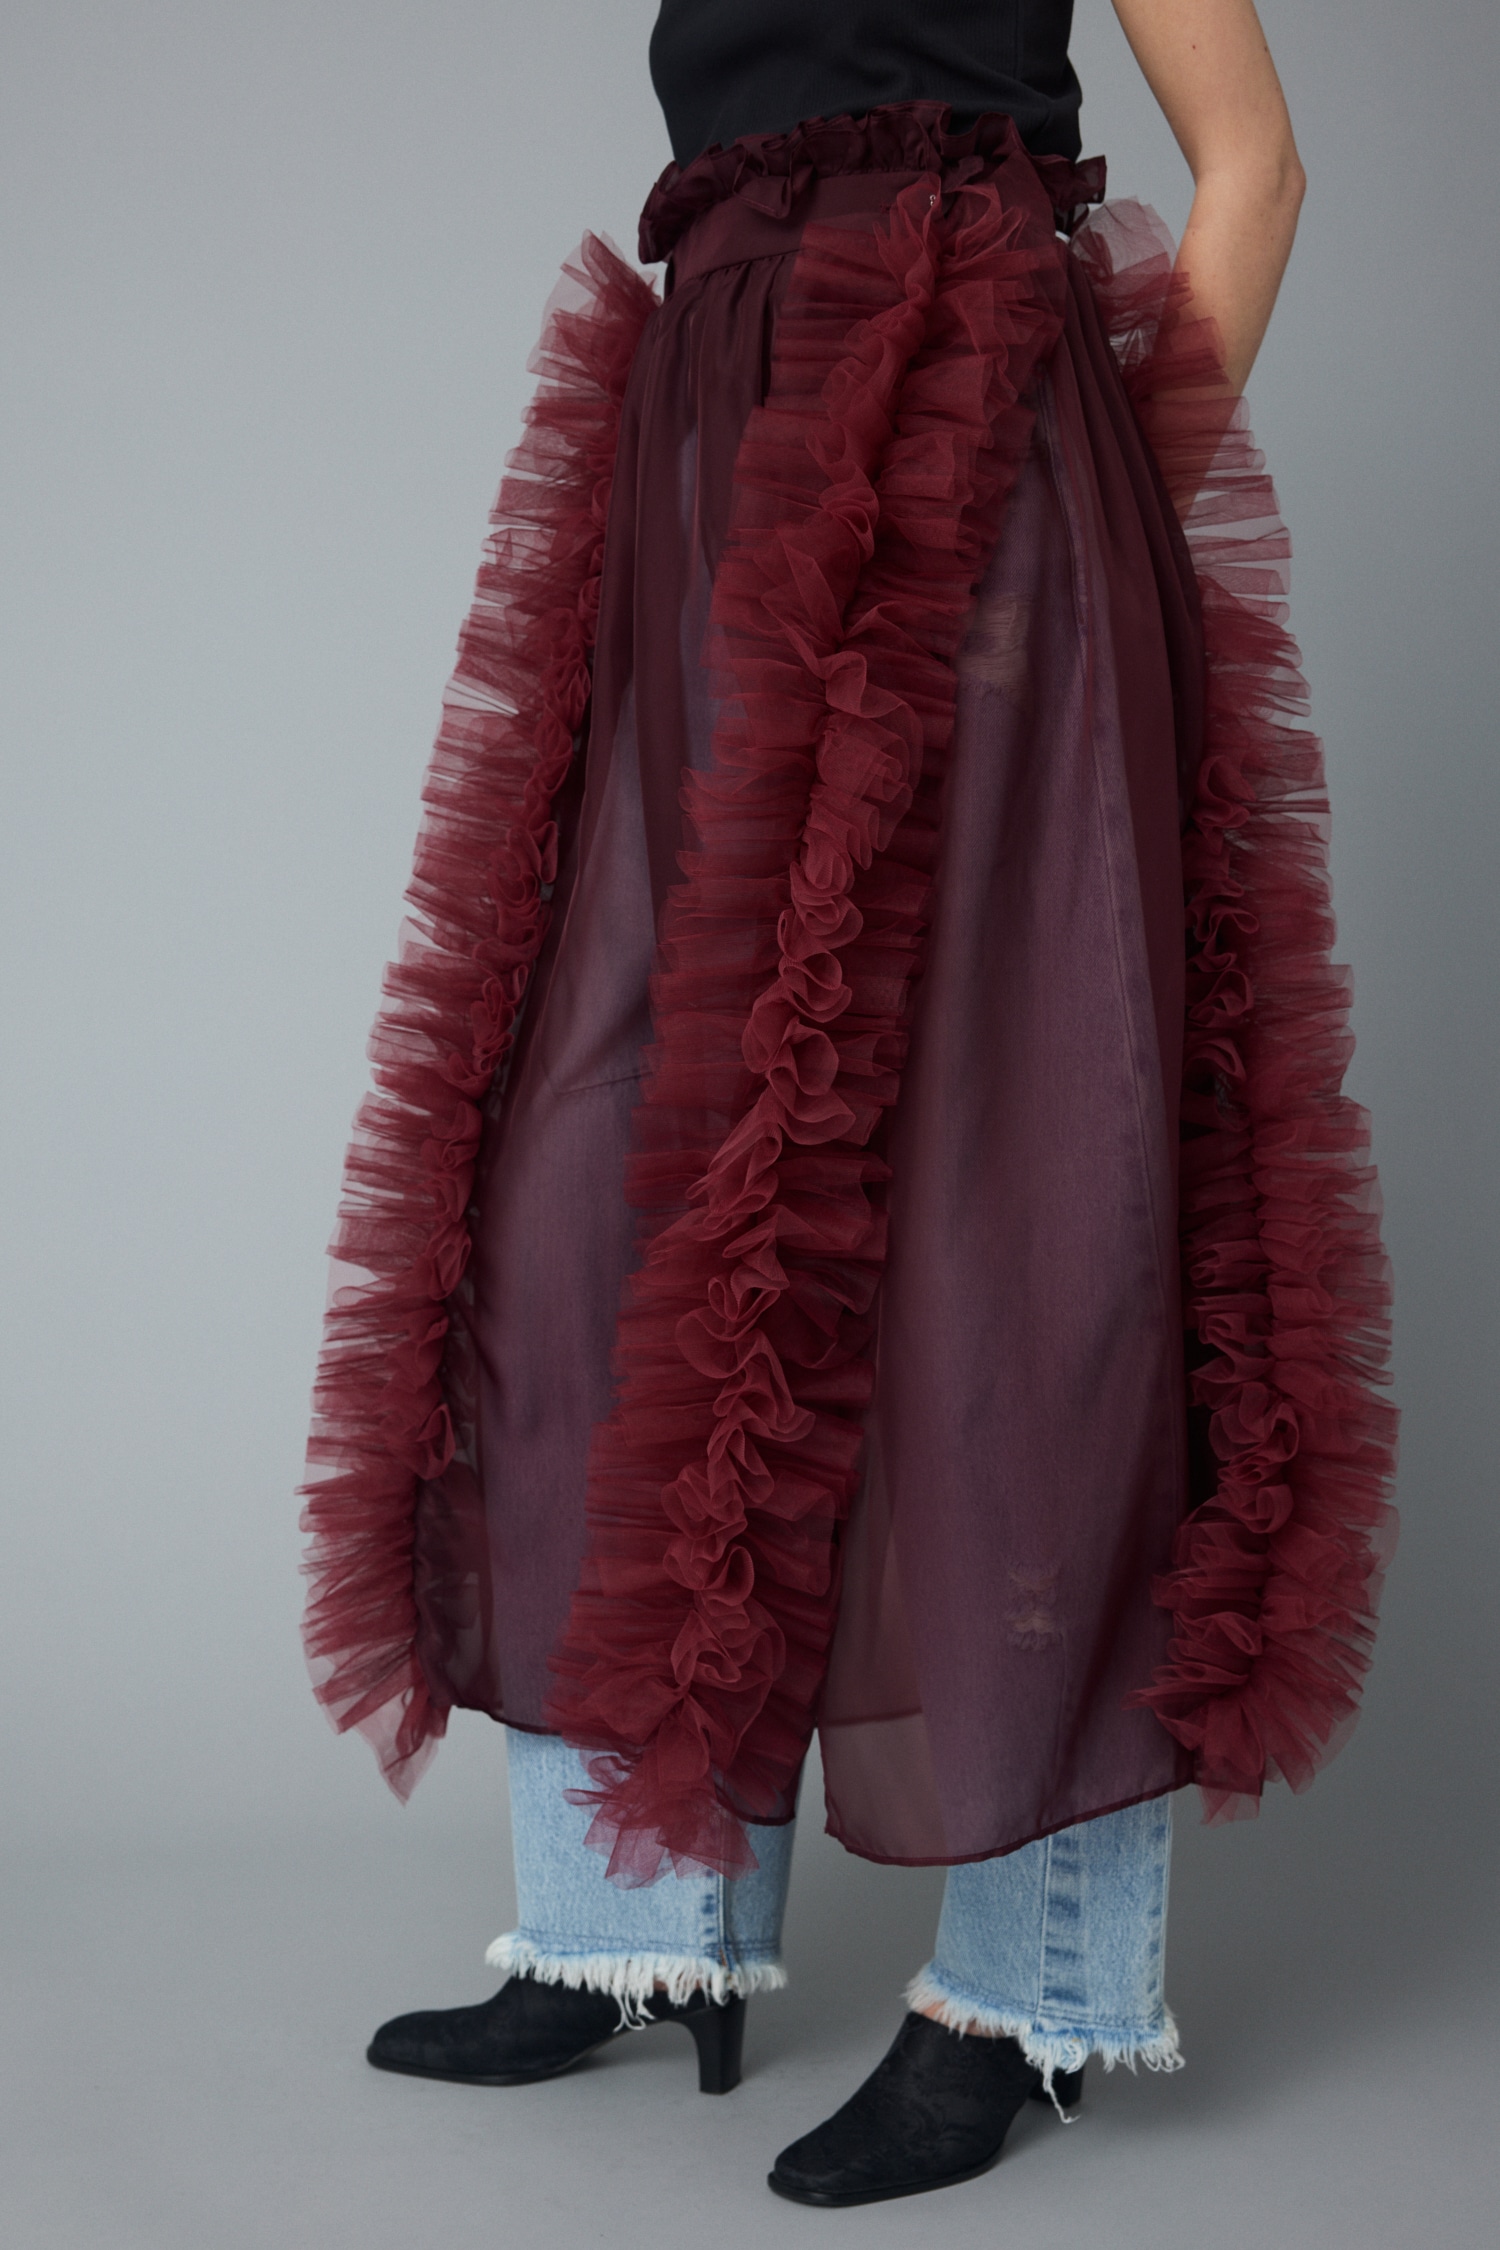 HeRIN.CYE | Sheer frill skirt (スカート(ロング) ) |SHEL'TTER WEBSTORE